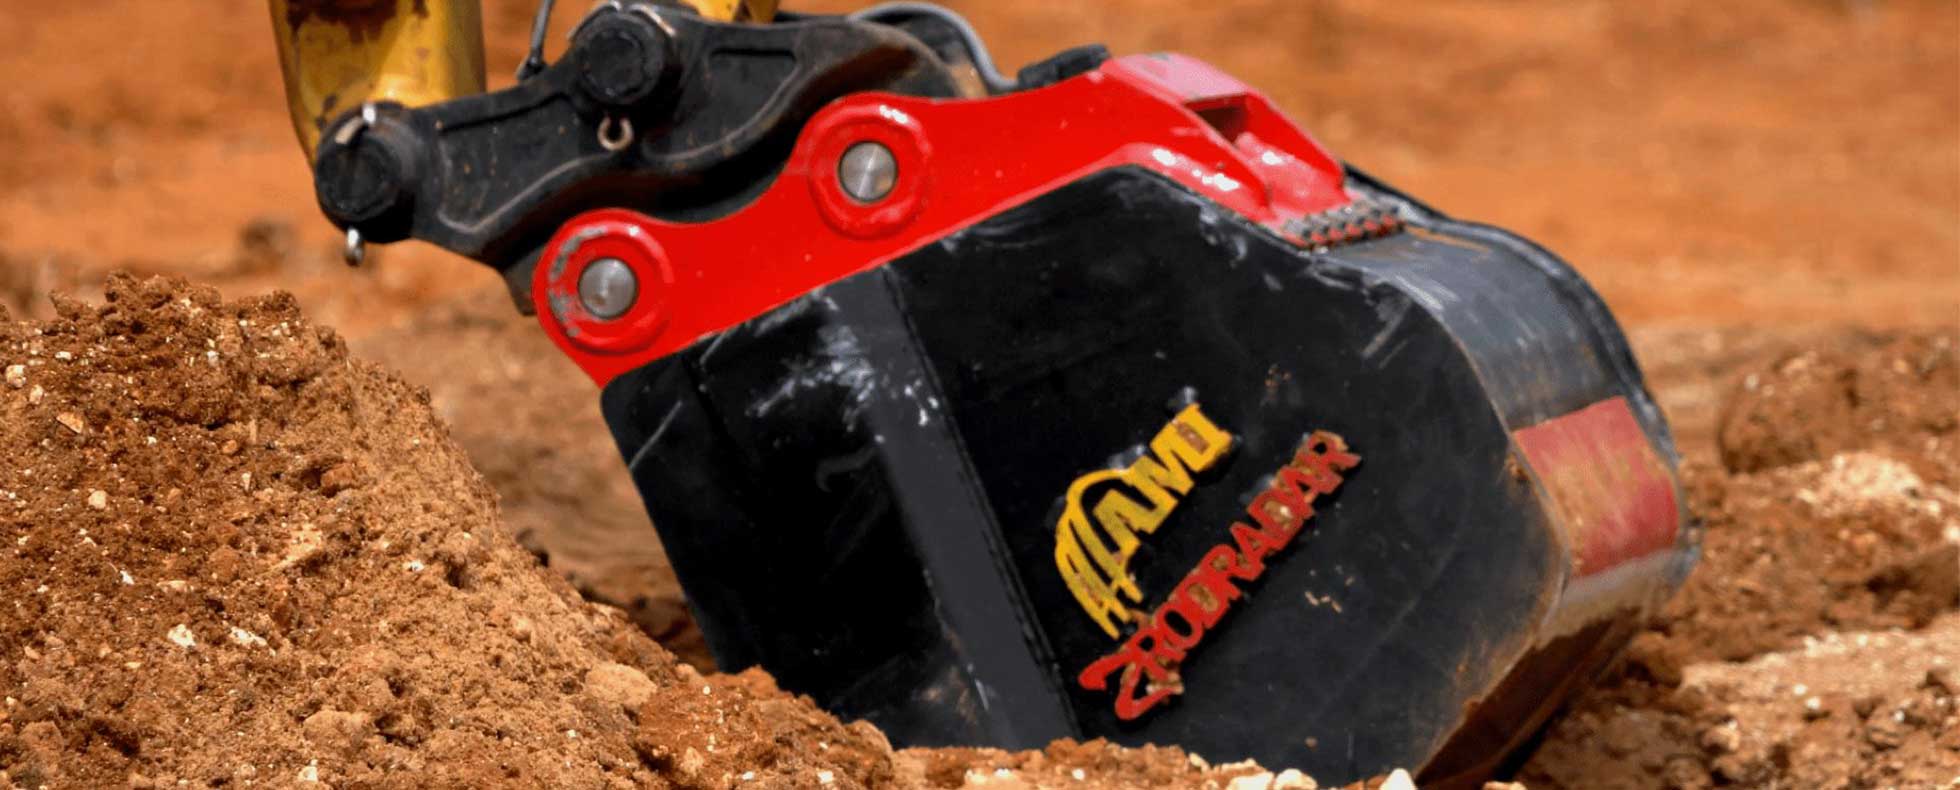 RodRadar, Innovative Digging Bucket Enhances Safety on Construction Sites